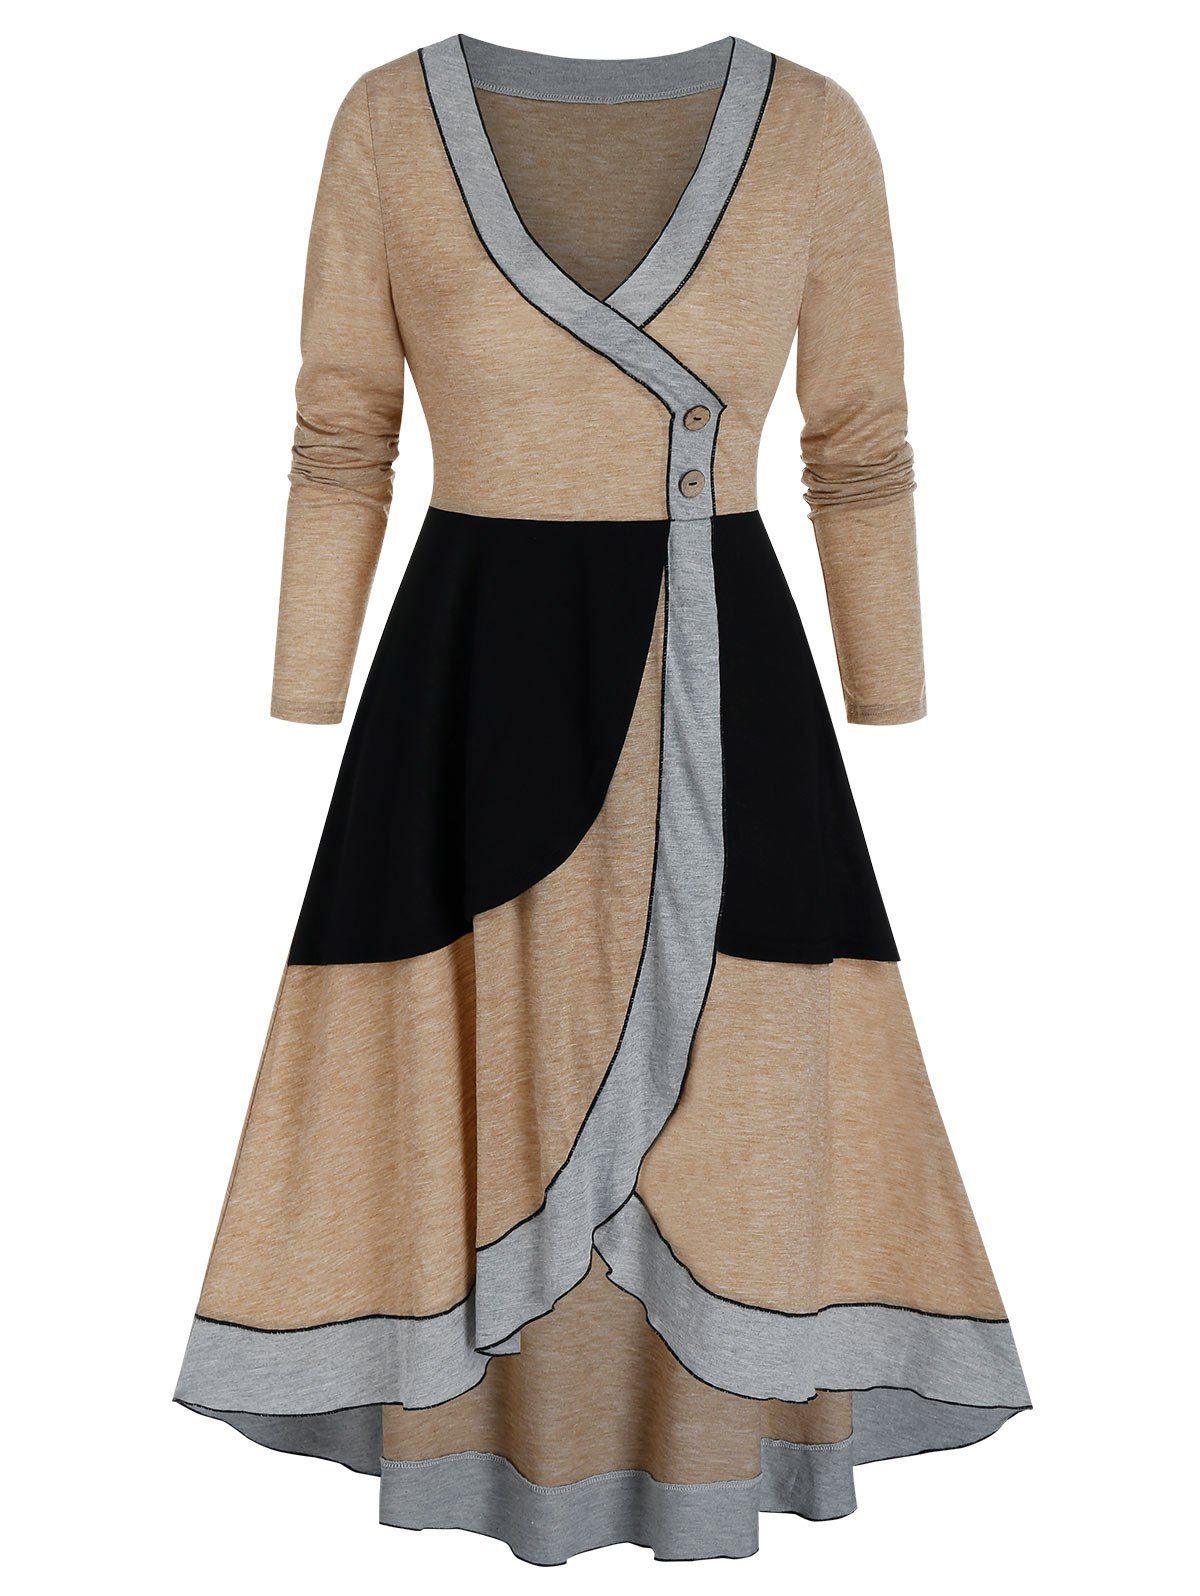 V Neck Colorblock High Low Long Sleeve Dress - multicolor A 2XL